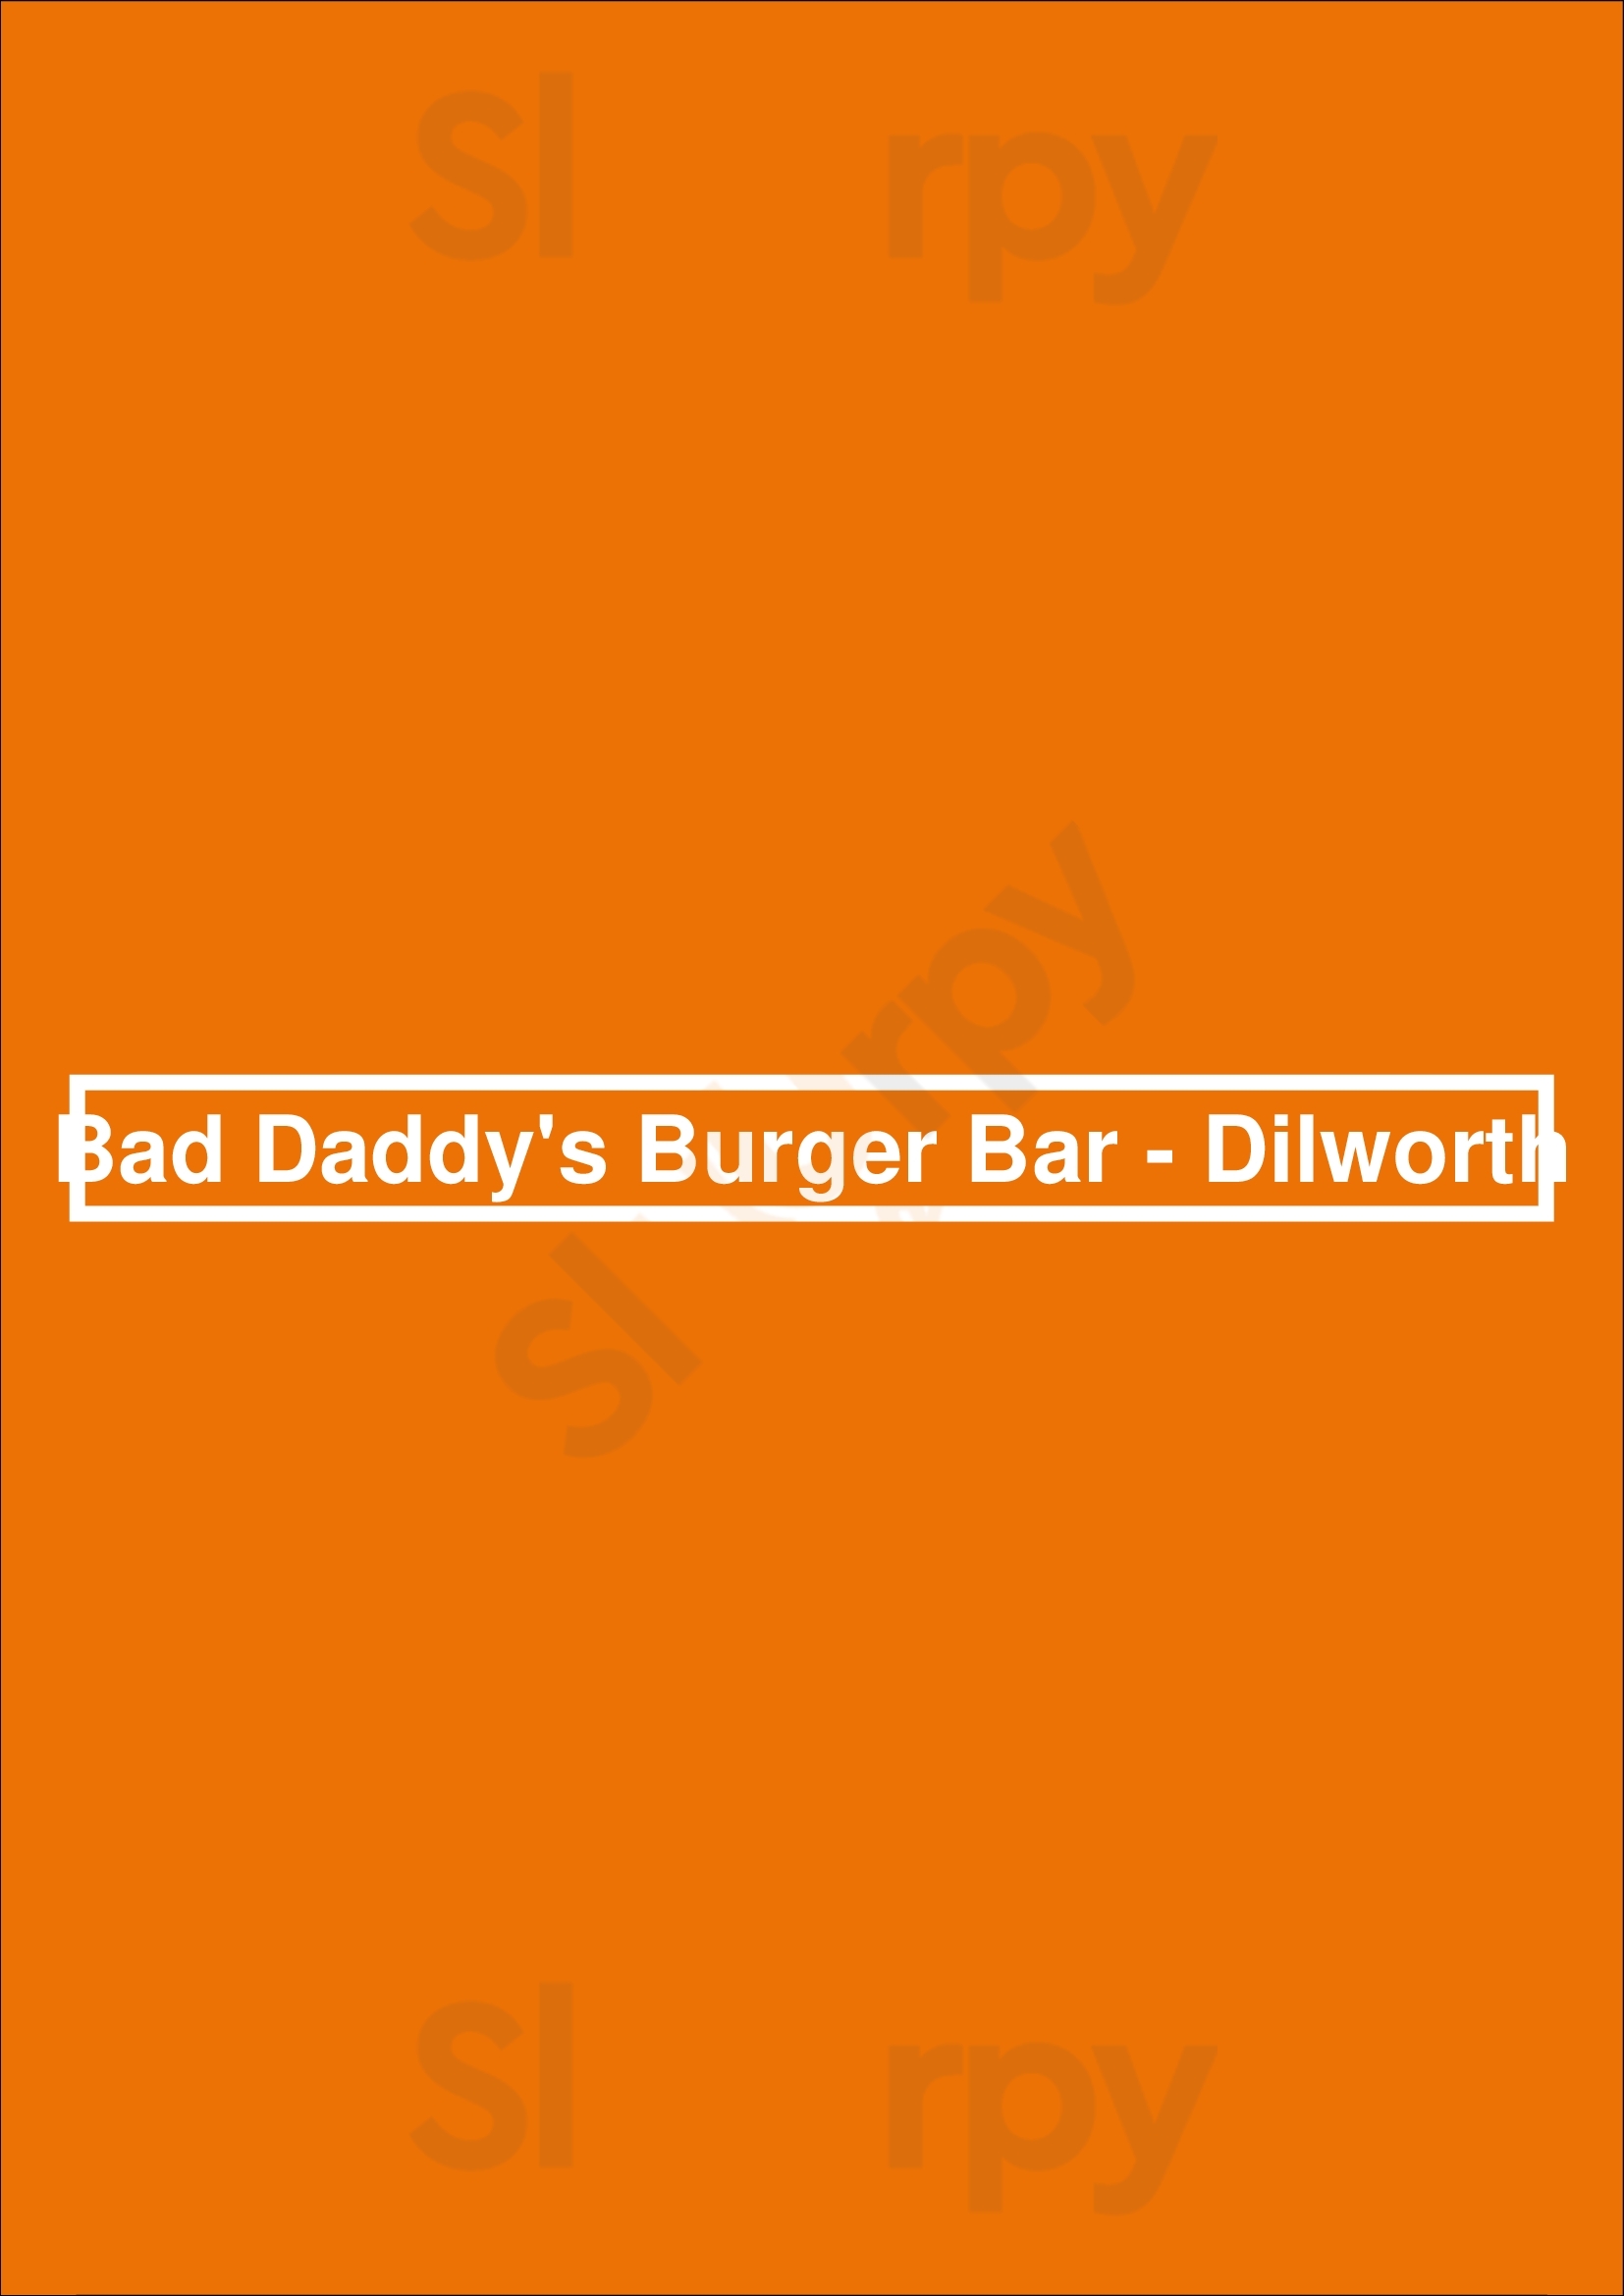 Bad Daddy's Burger Bar Charlotte Menu - 1